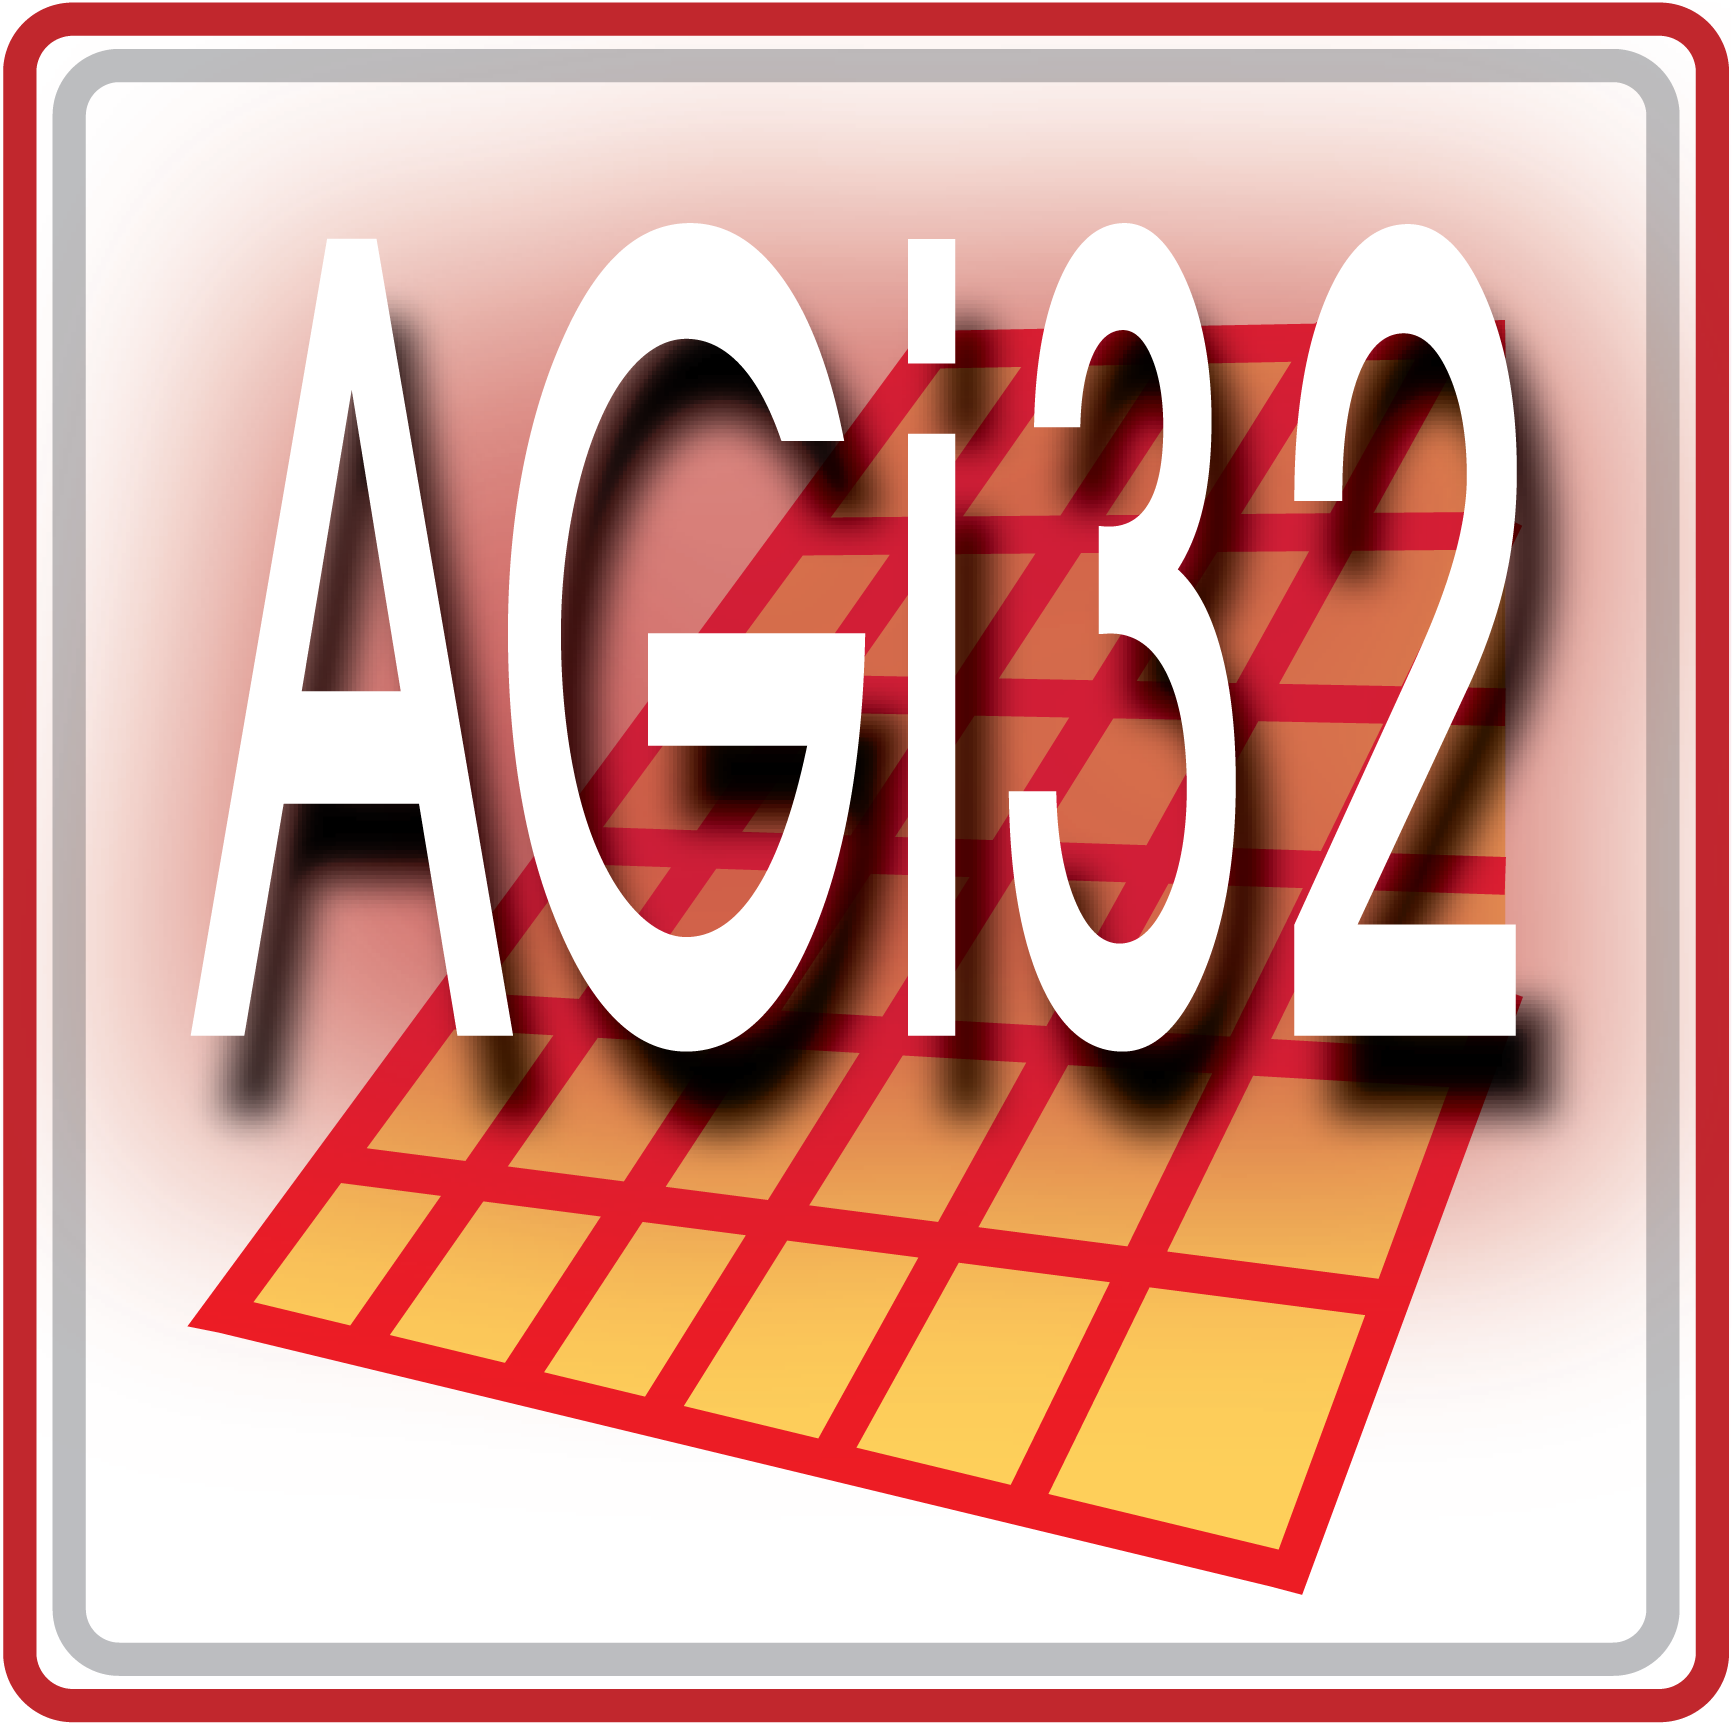 Lighting Analysts - Agi32 (2346x2308)